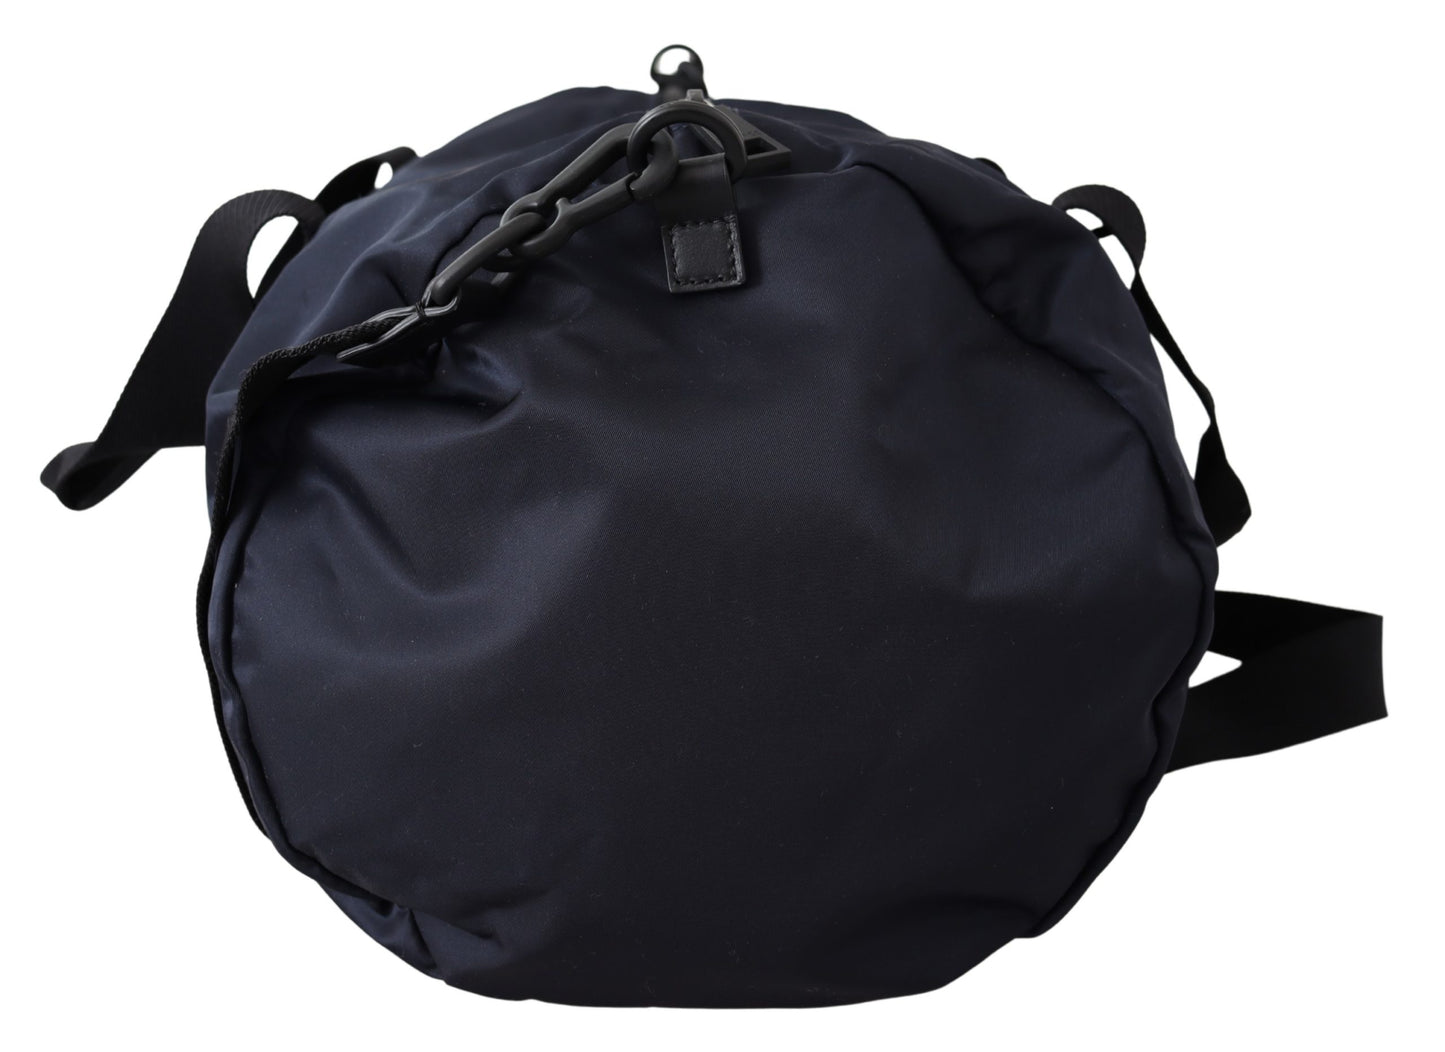 Blue Nylon Travel Bag